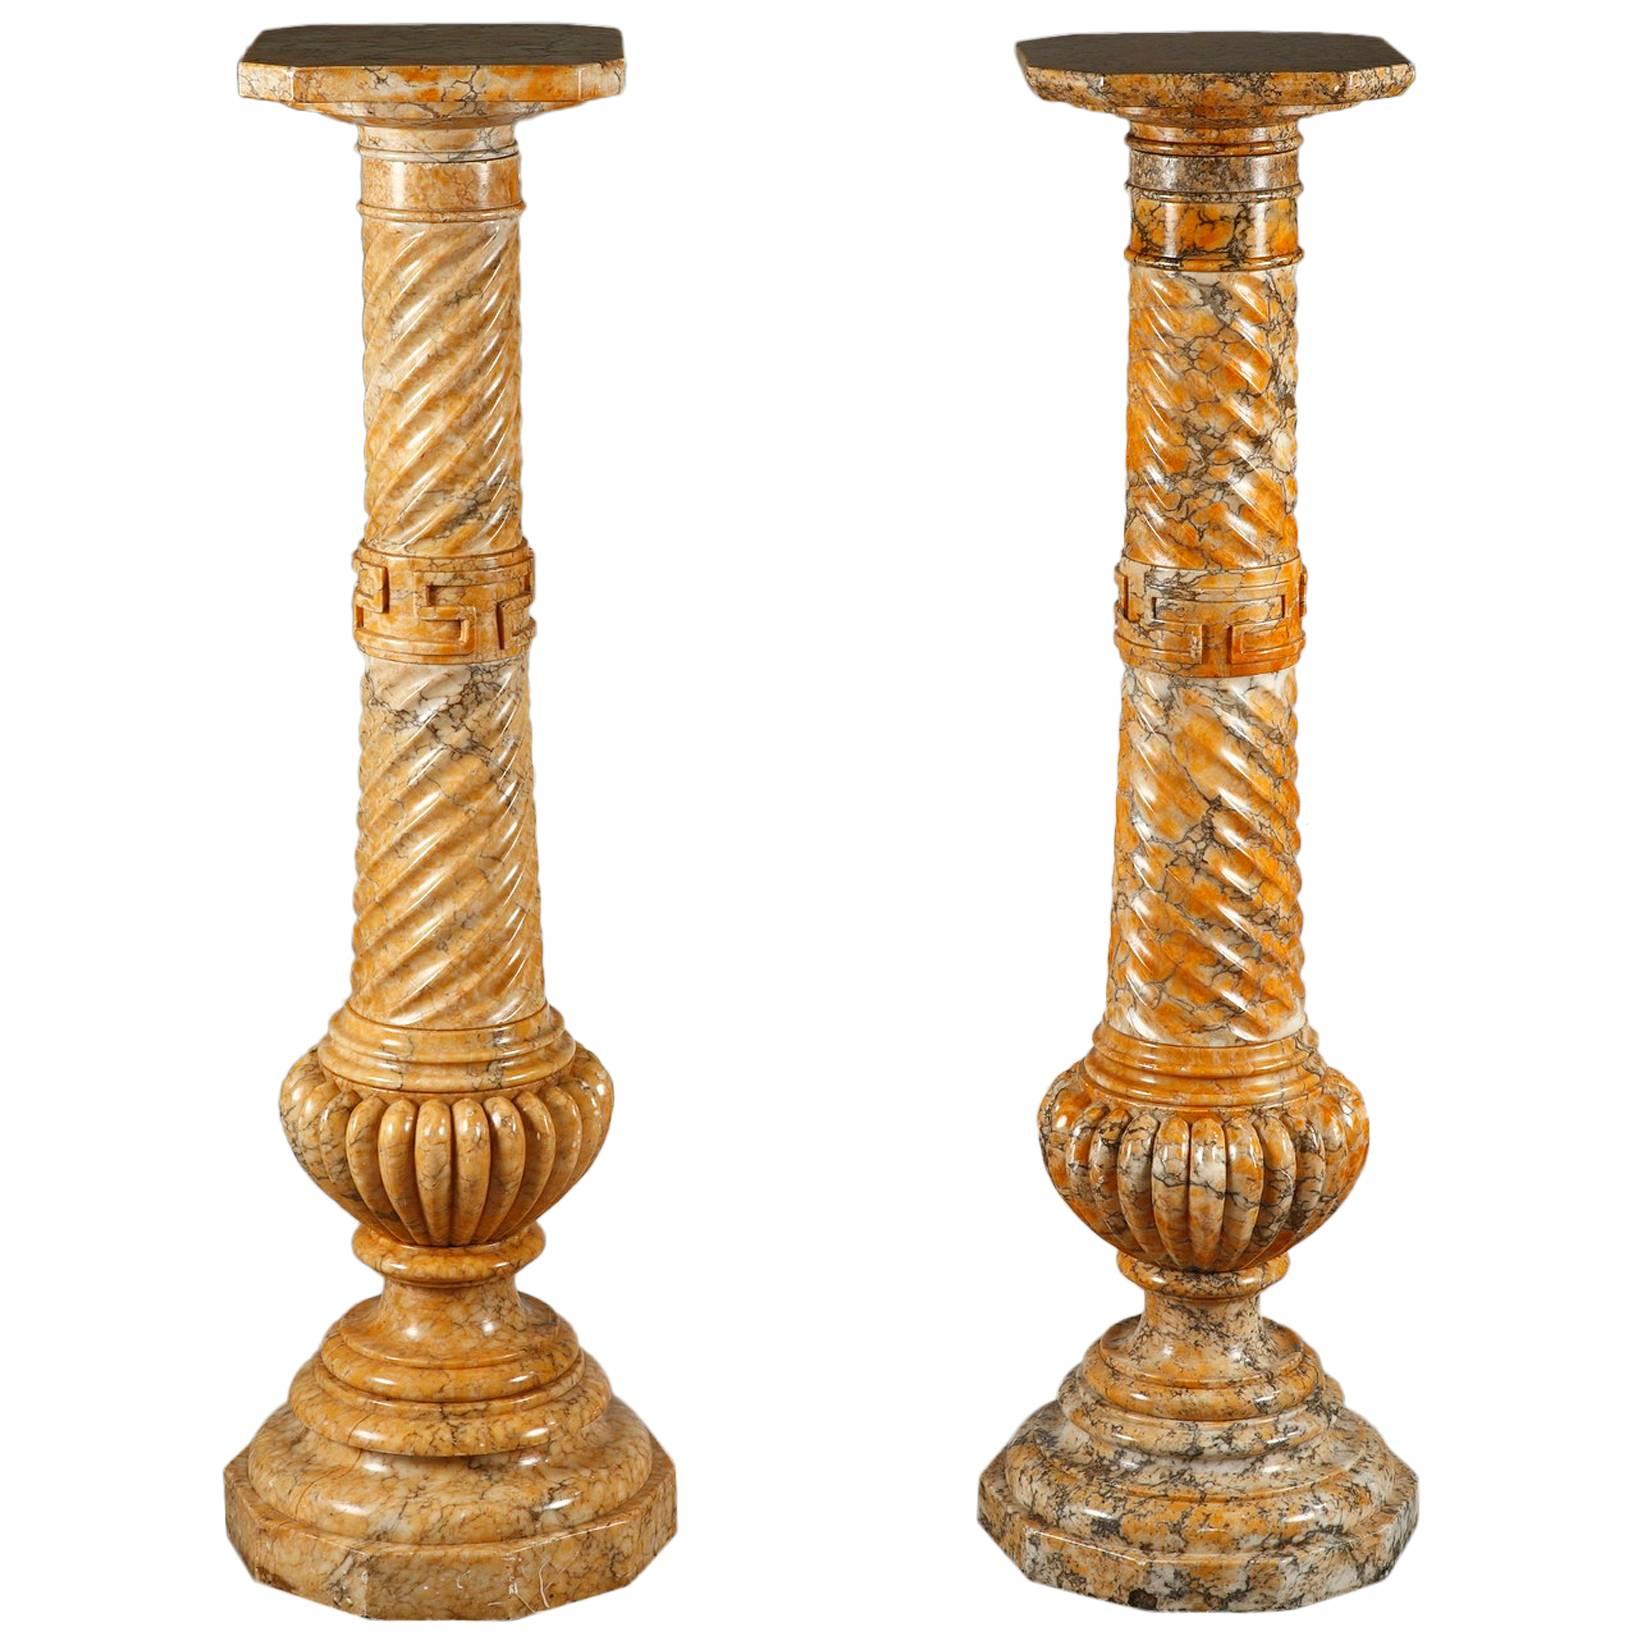 Two Spiraling Sienna Marble Columns